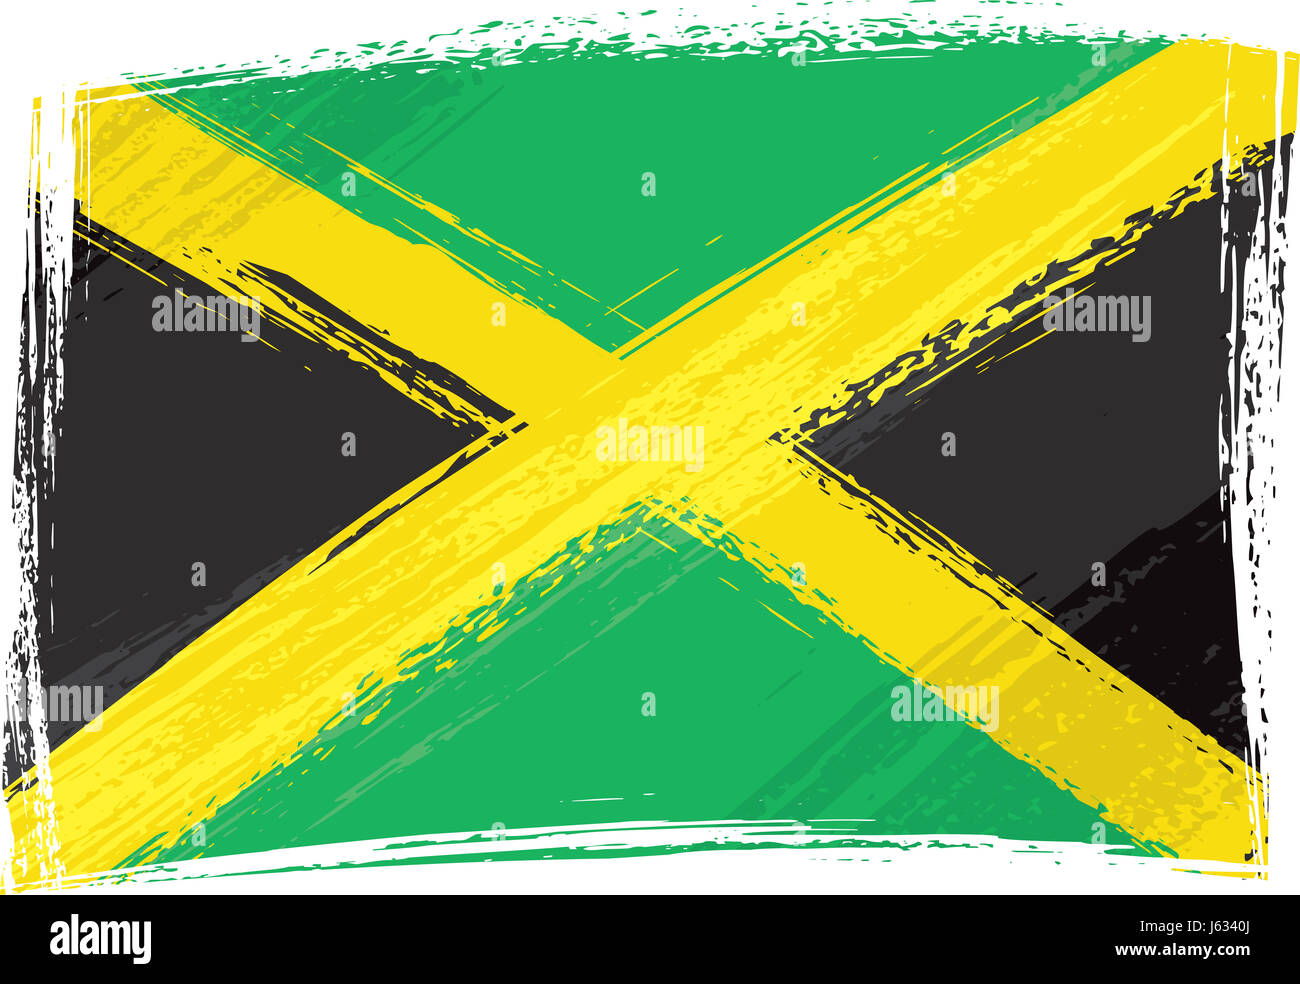 flag jamaica emblem green dust rough black swarthy jetblack deep black america Stock Photo